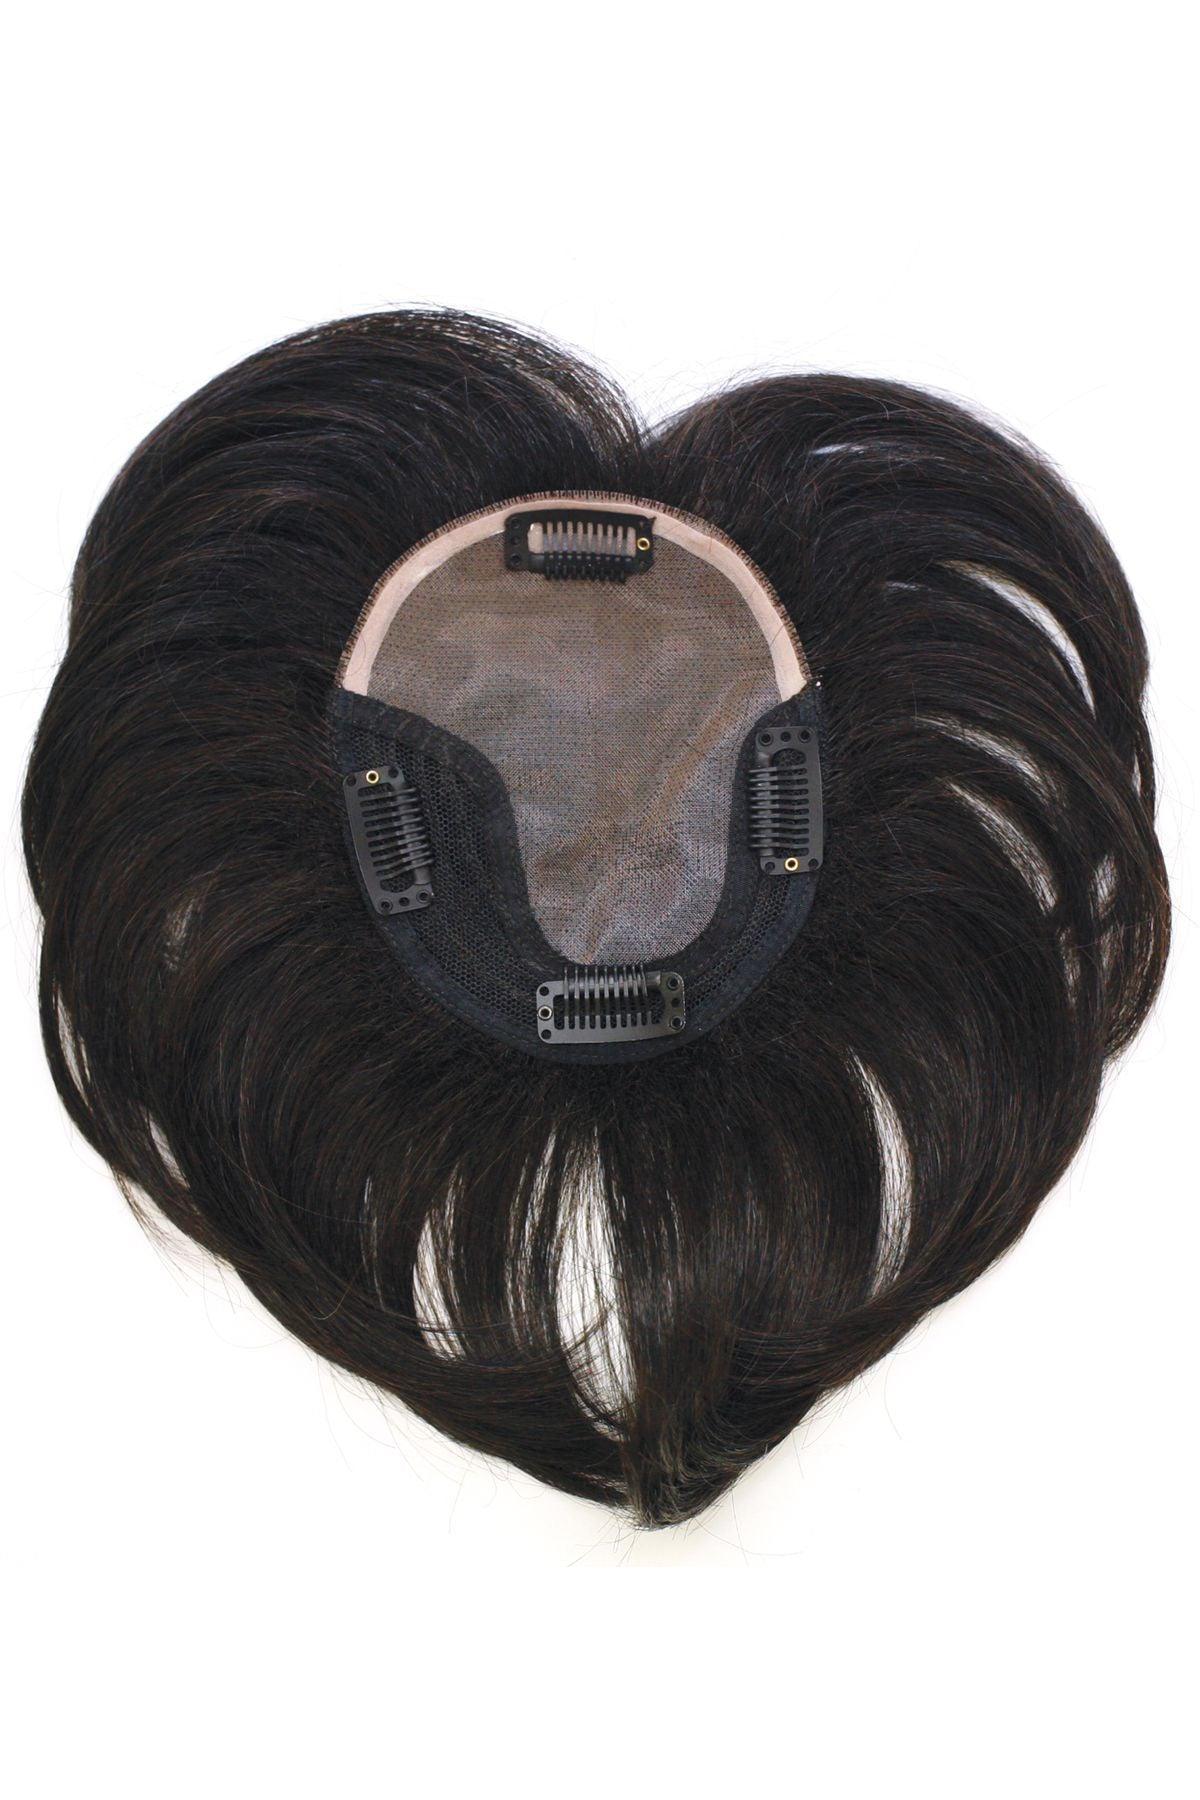 Mono Wiglet 5 Hairpiece by Estetica Designs | Synthetic